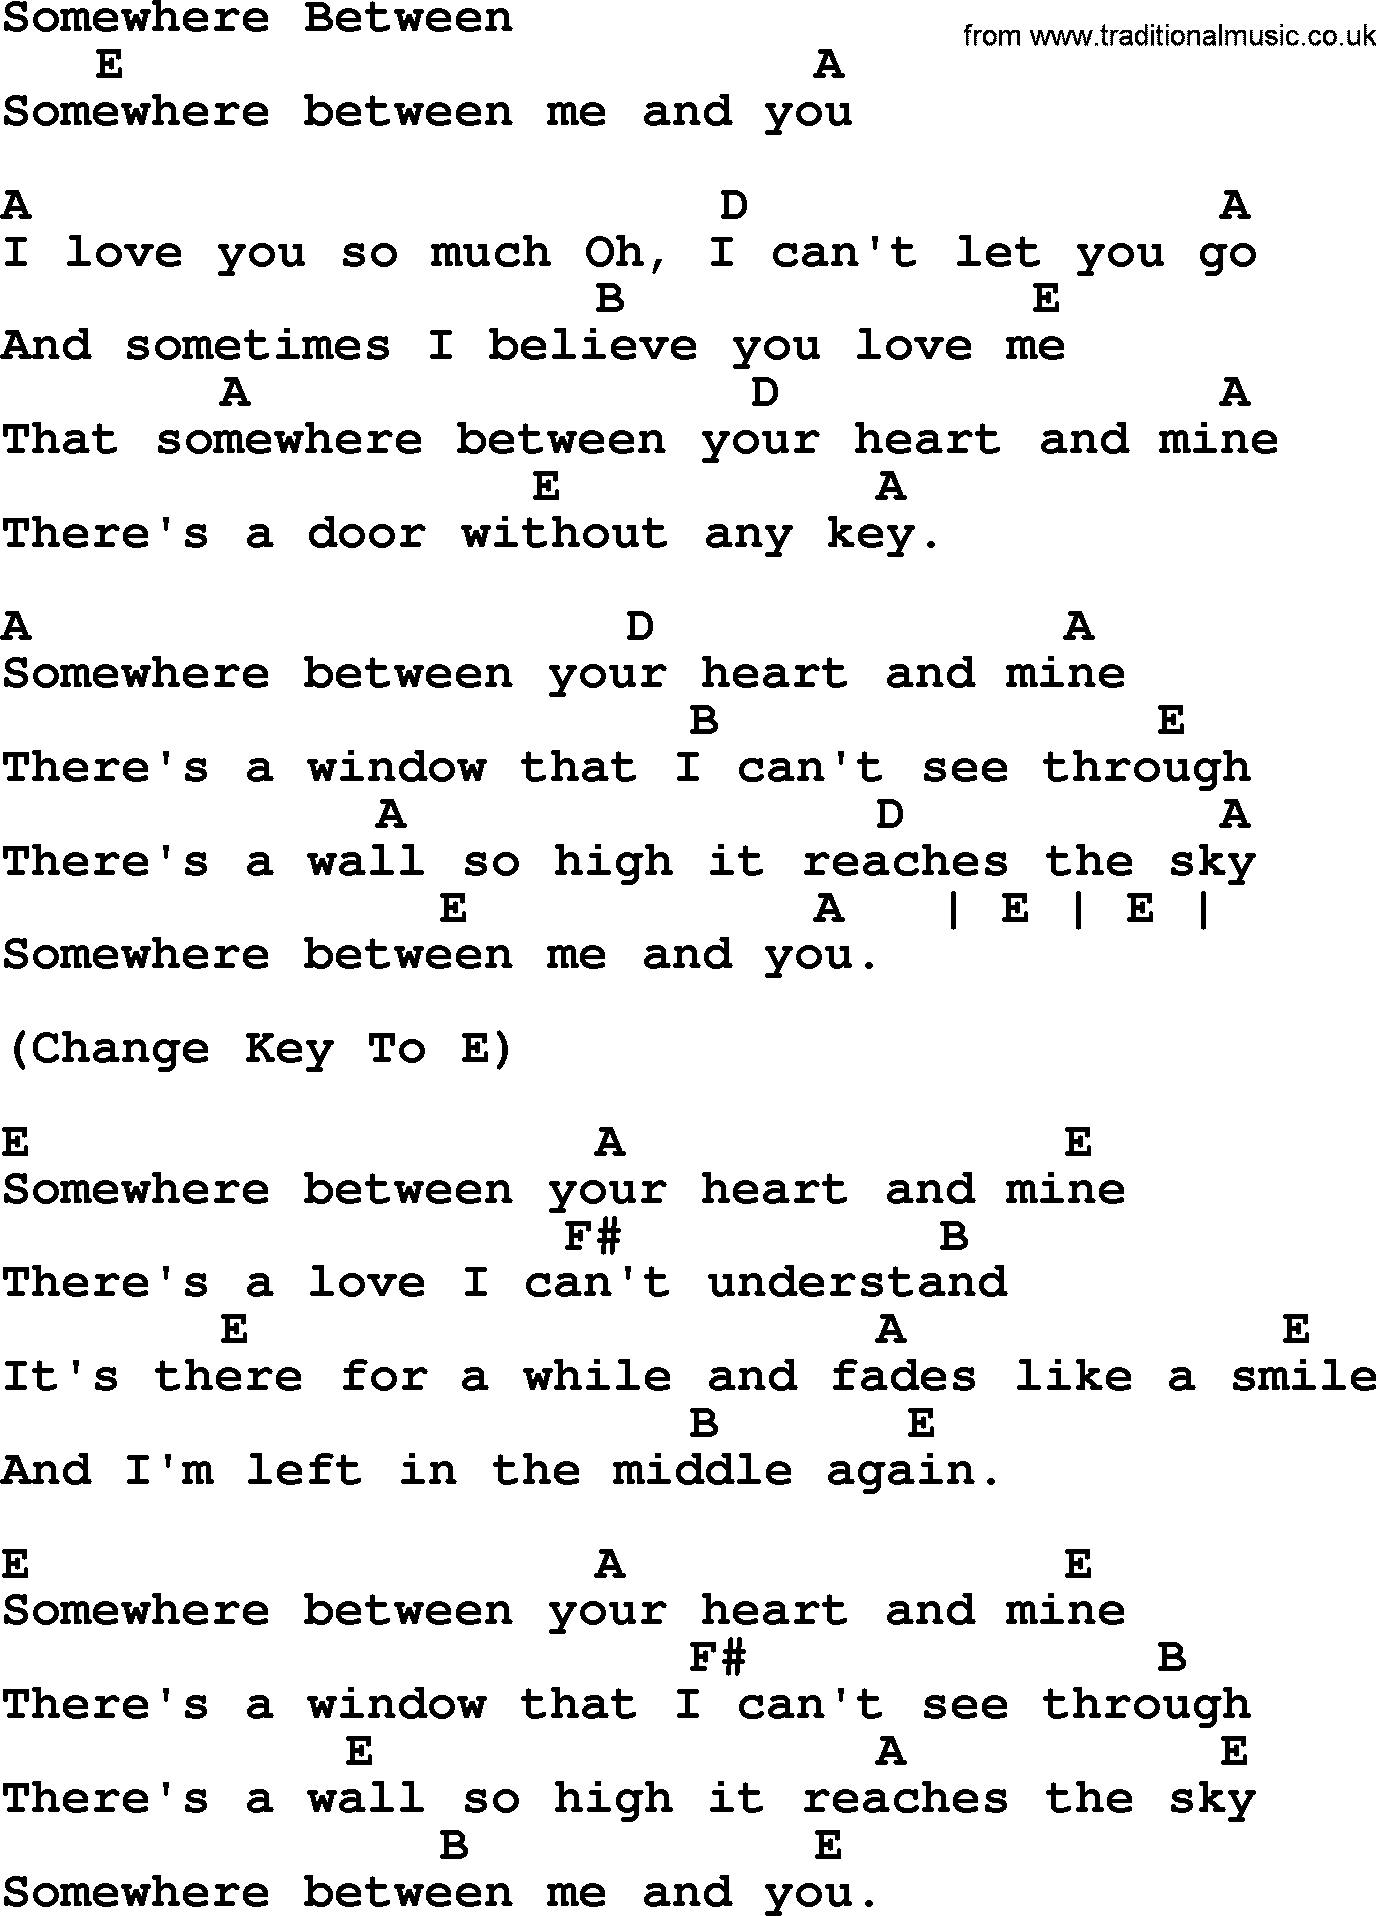 Bluegrass song: Somewhere Between, lyrics and chords